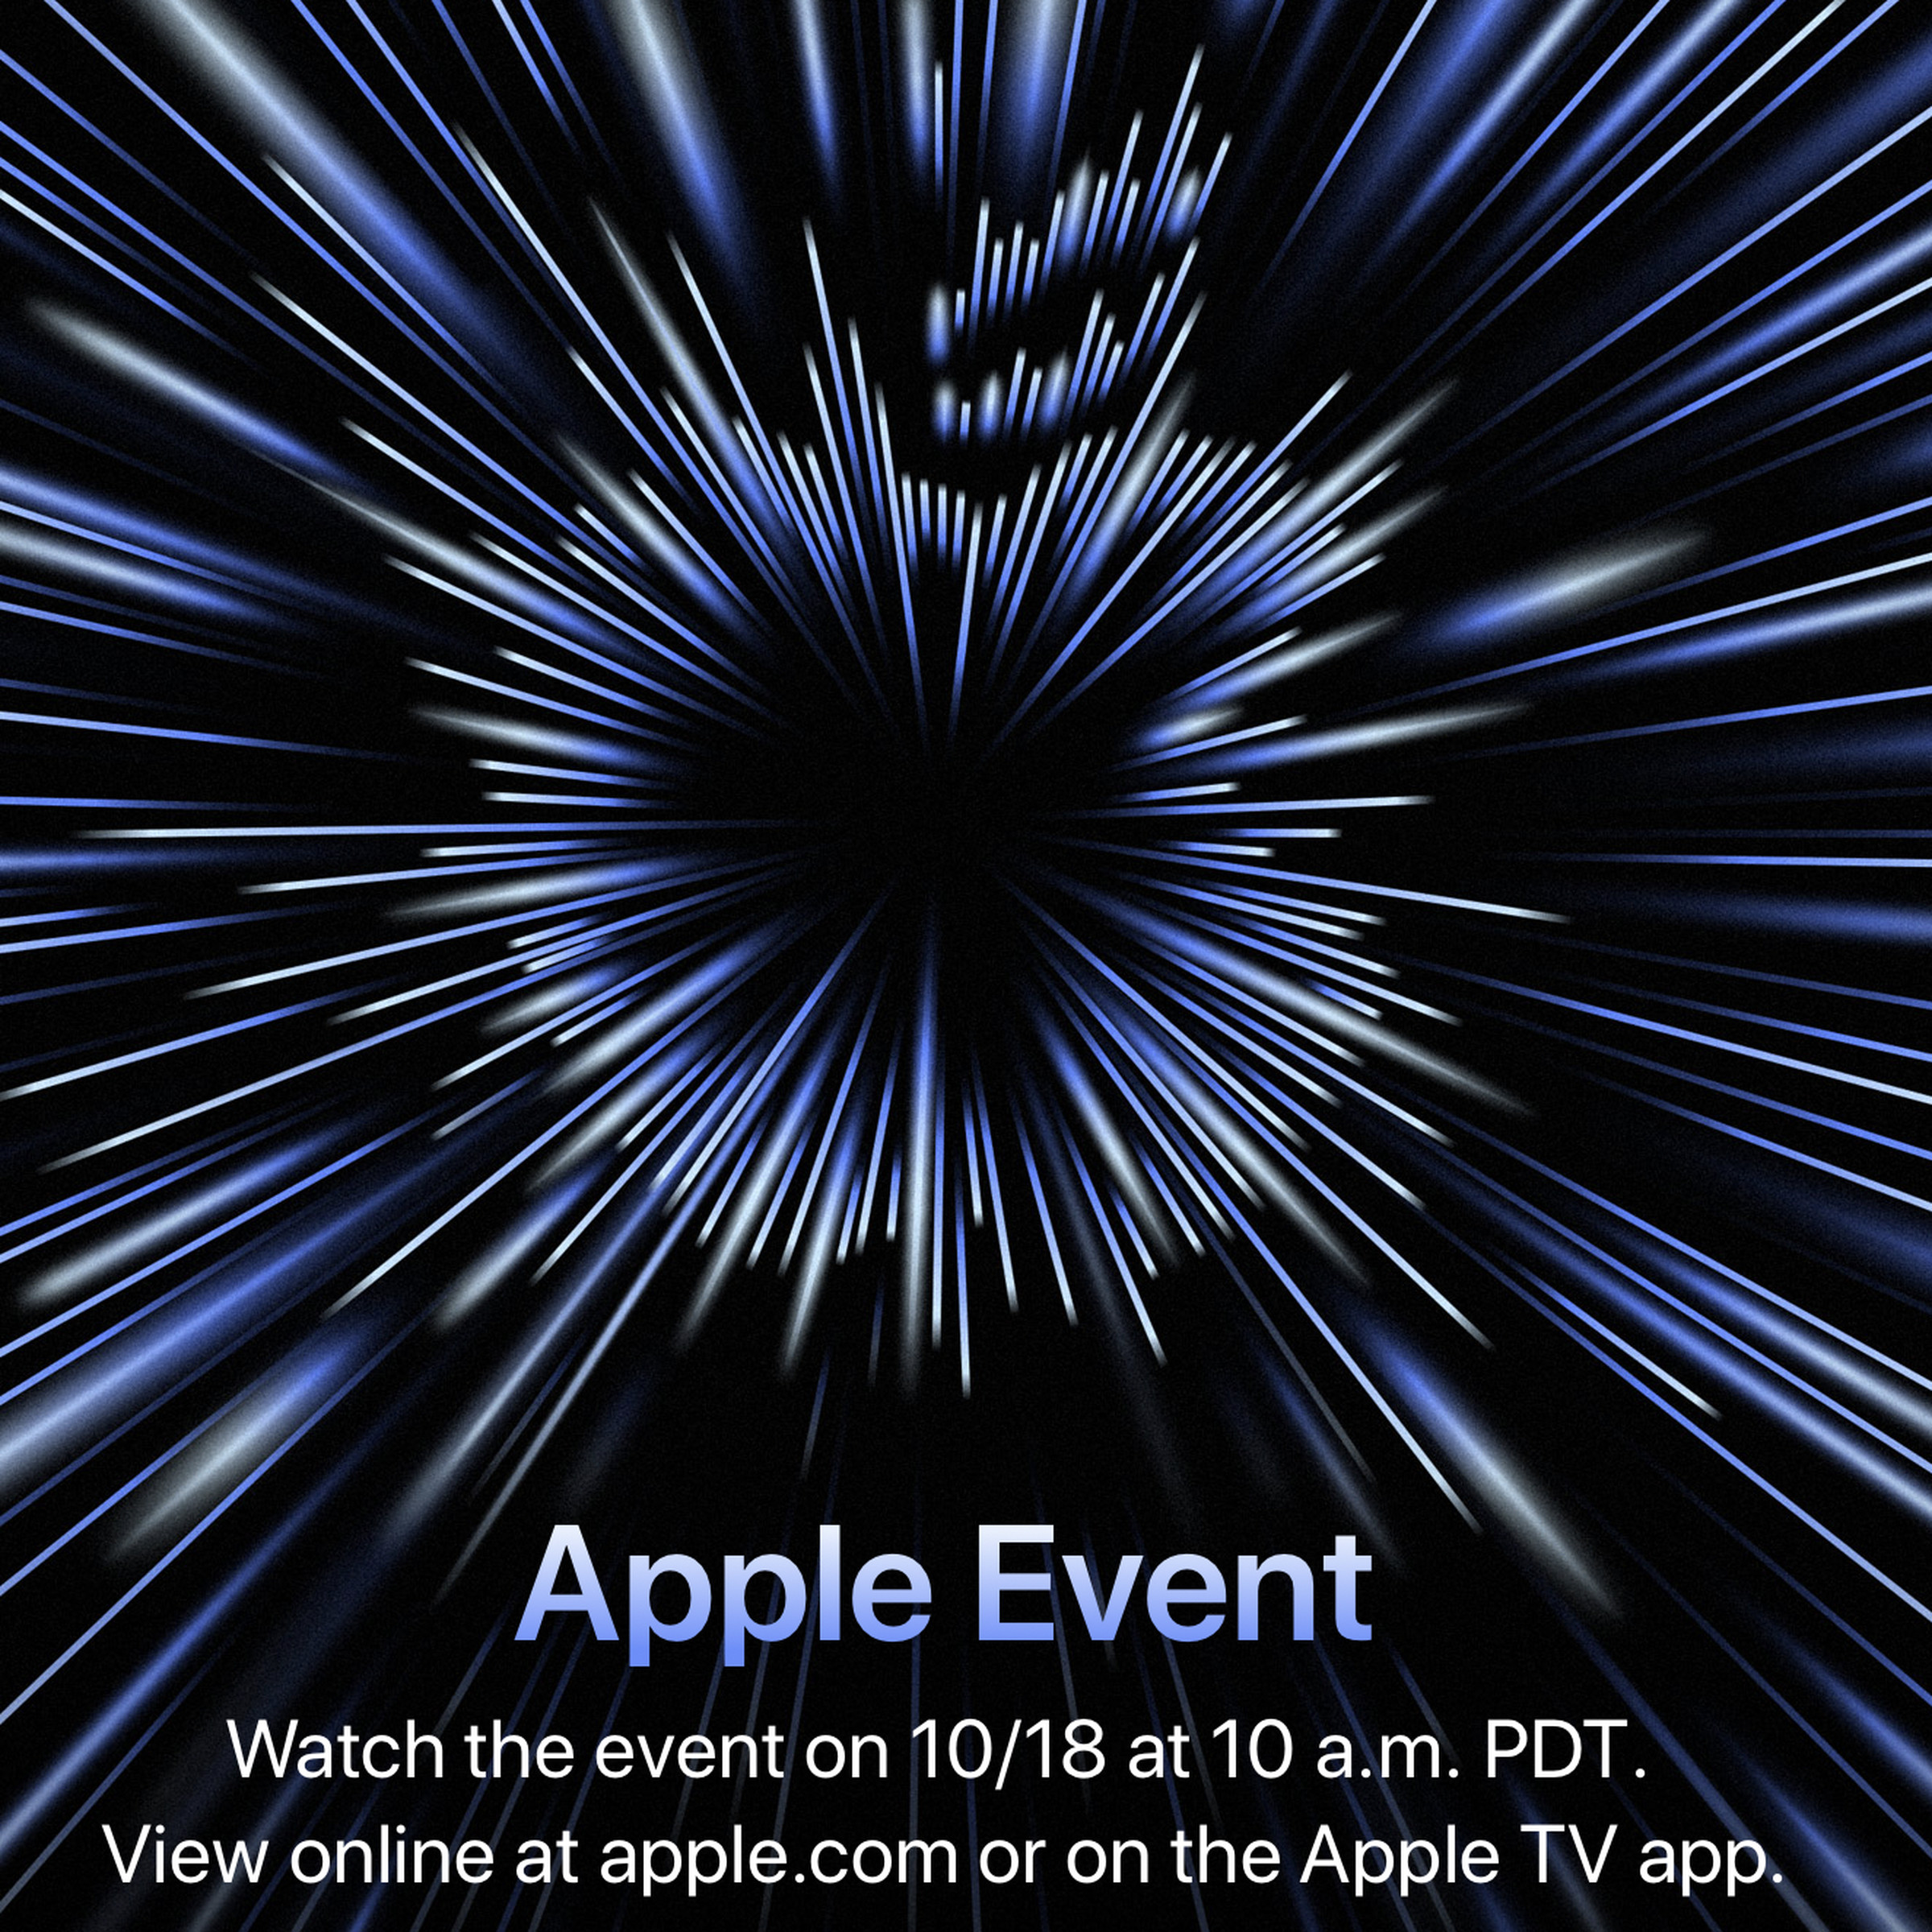 Apple’s event invitation